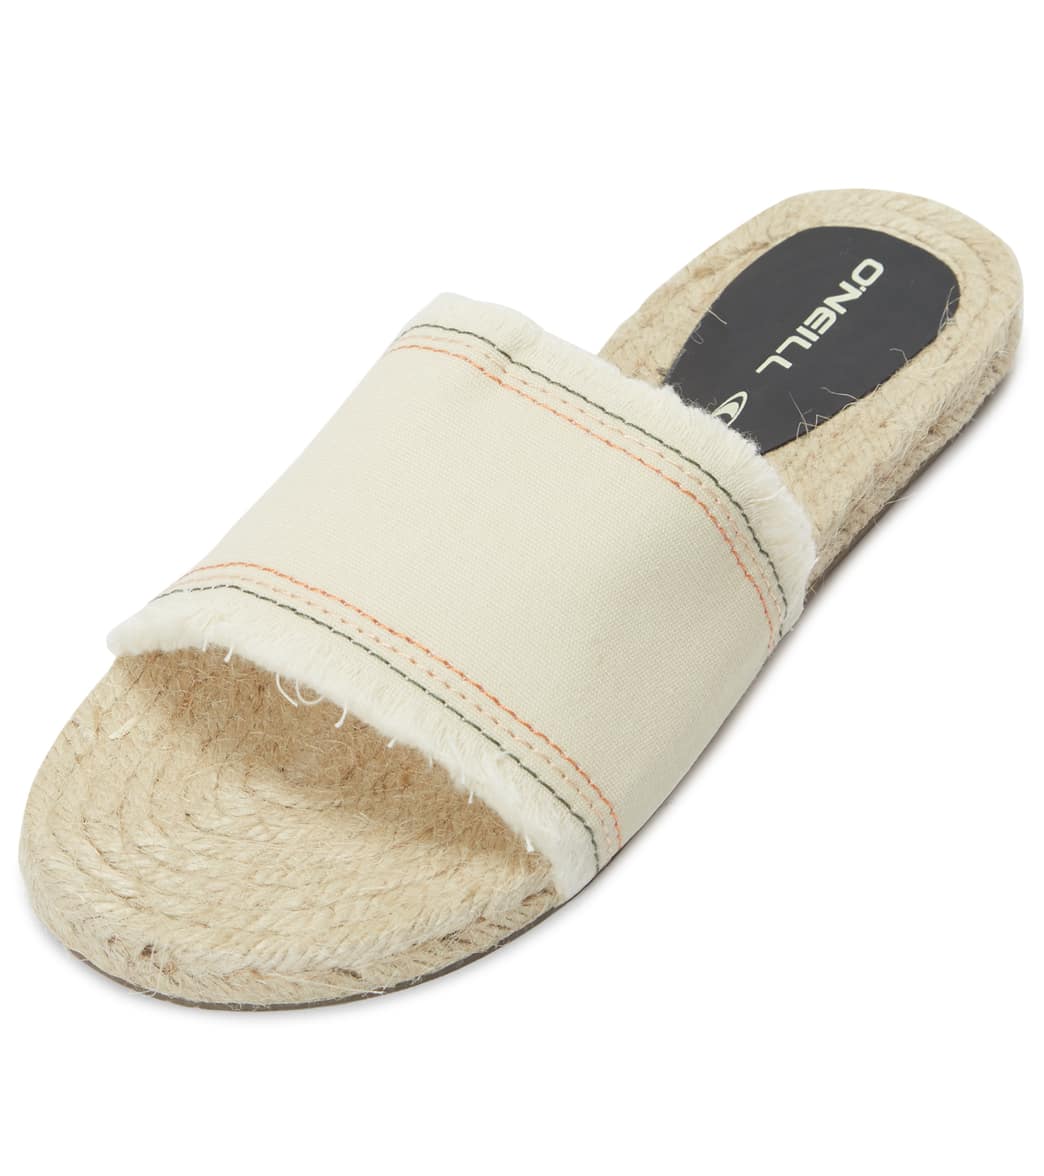 O'neill Dreamland Slides Sandals - Winter White 6 Cotton - Swimoutlet.com